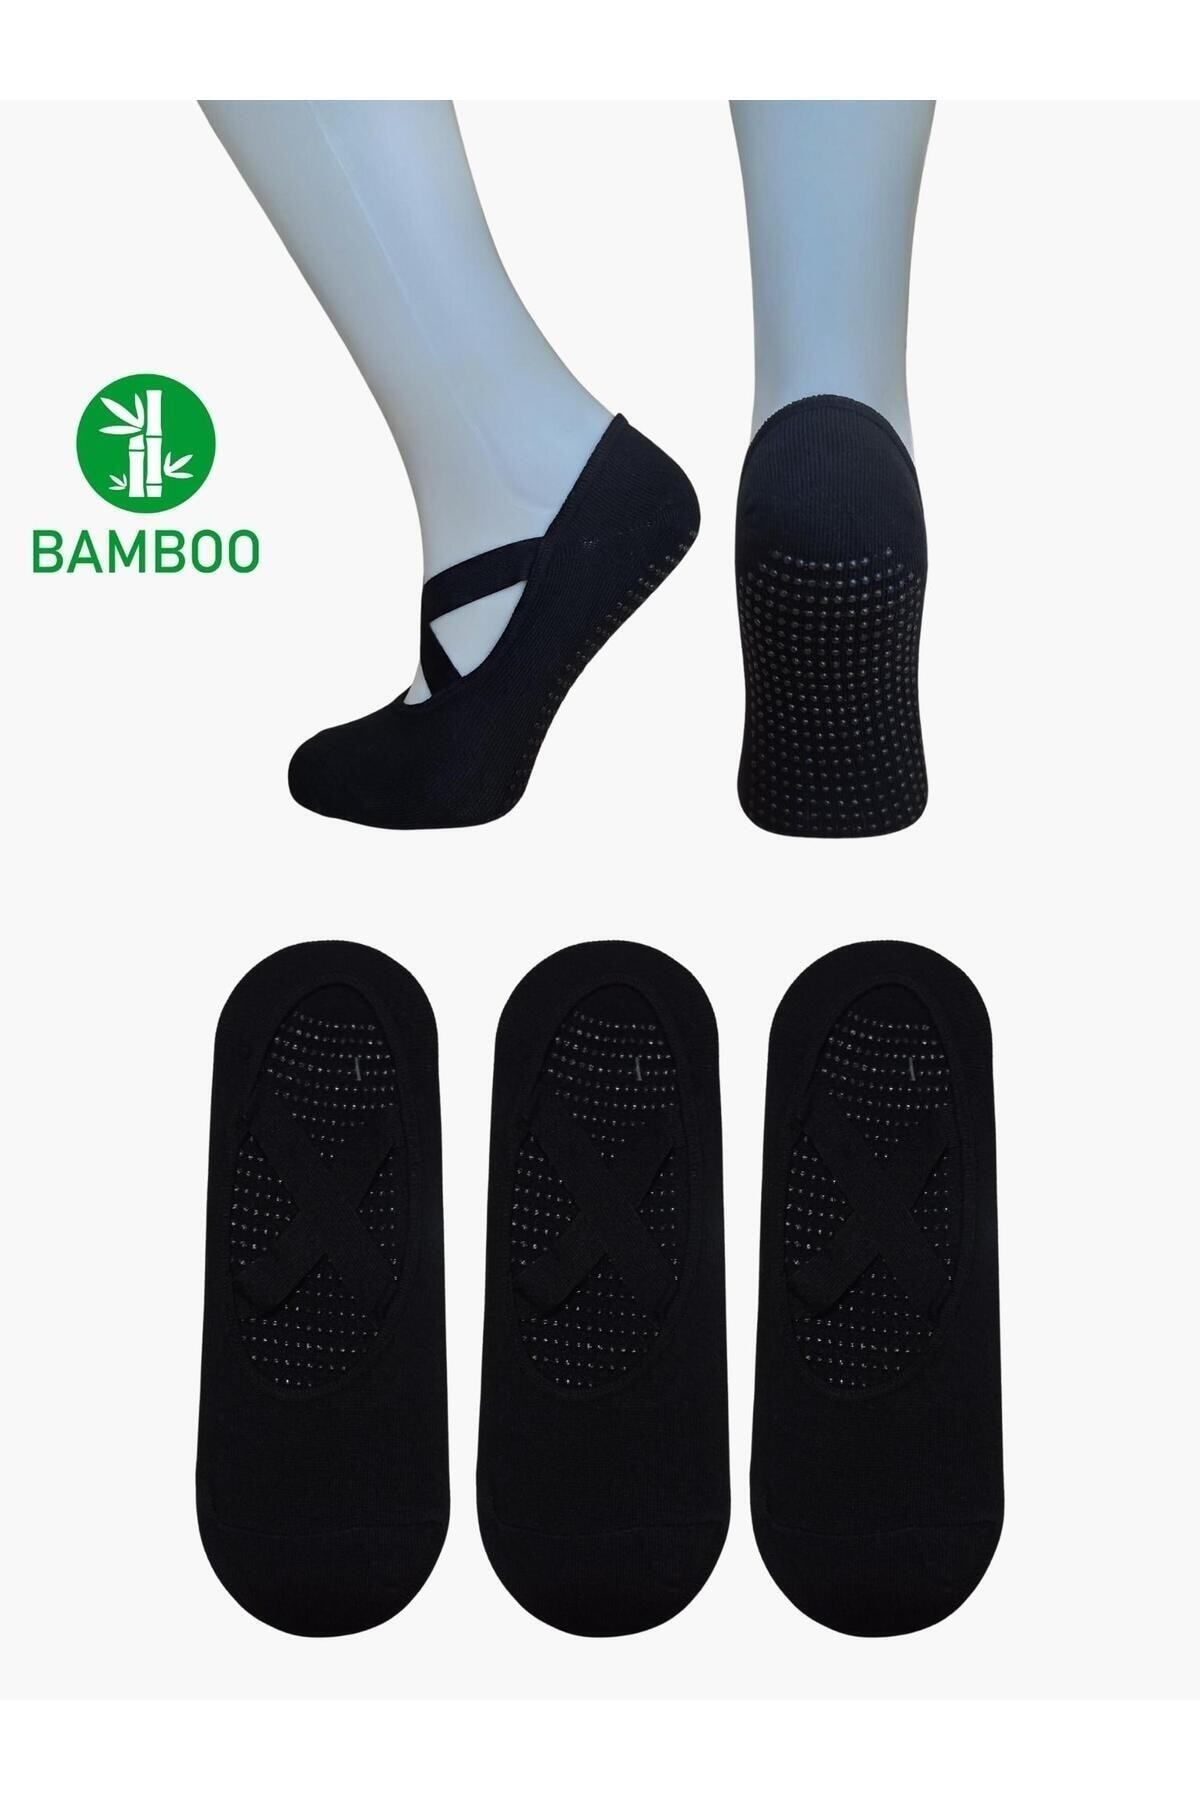 Bamboo Yoga Socks, Barre, Pilates Socks